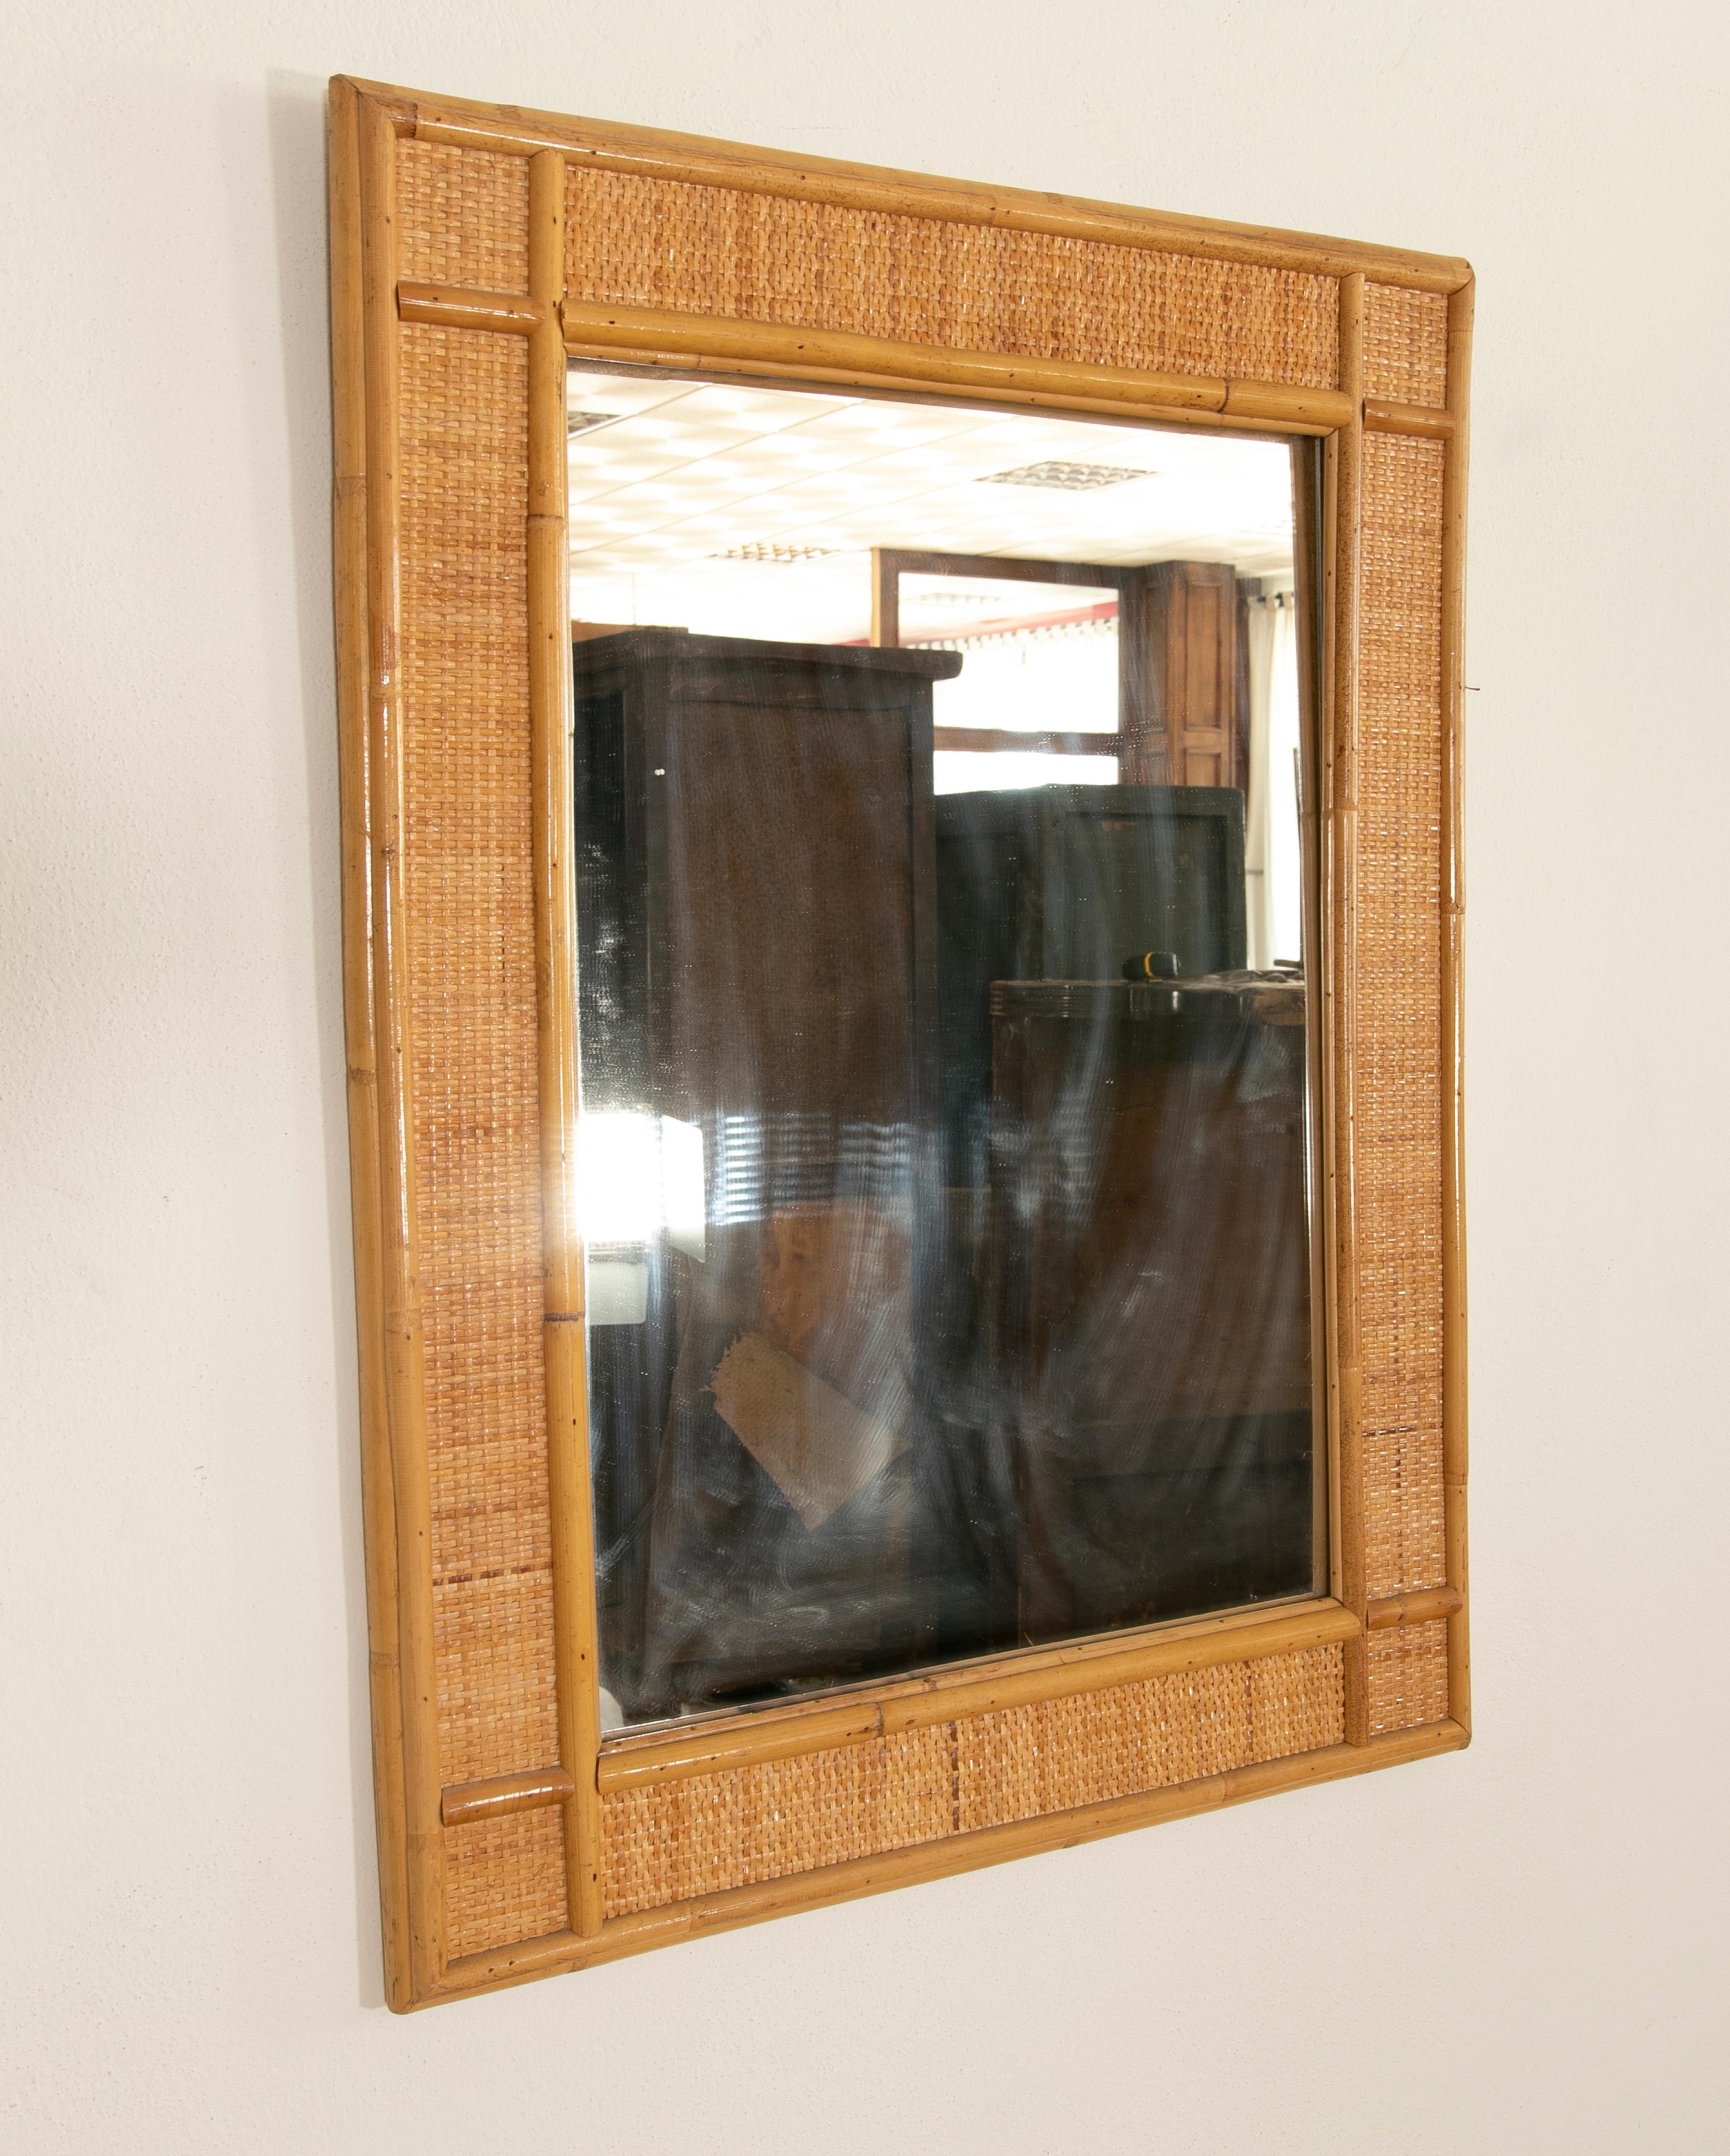 1980s Spanish bamboo and wicker wall mirror.